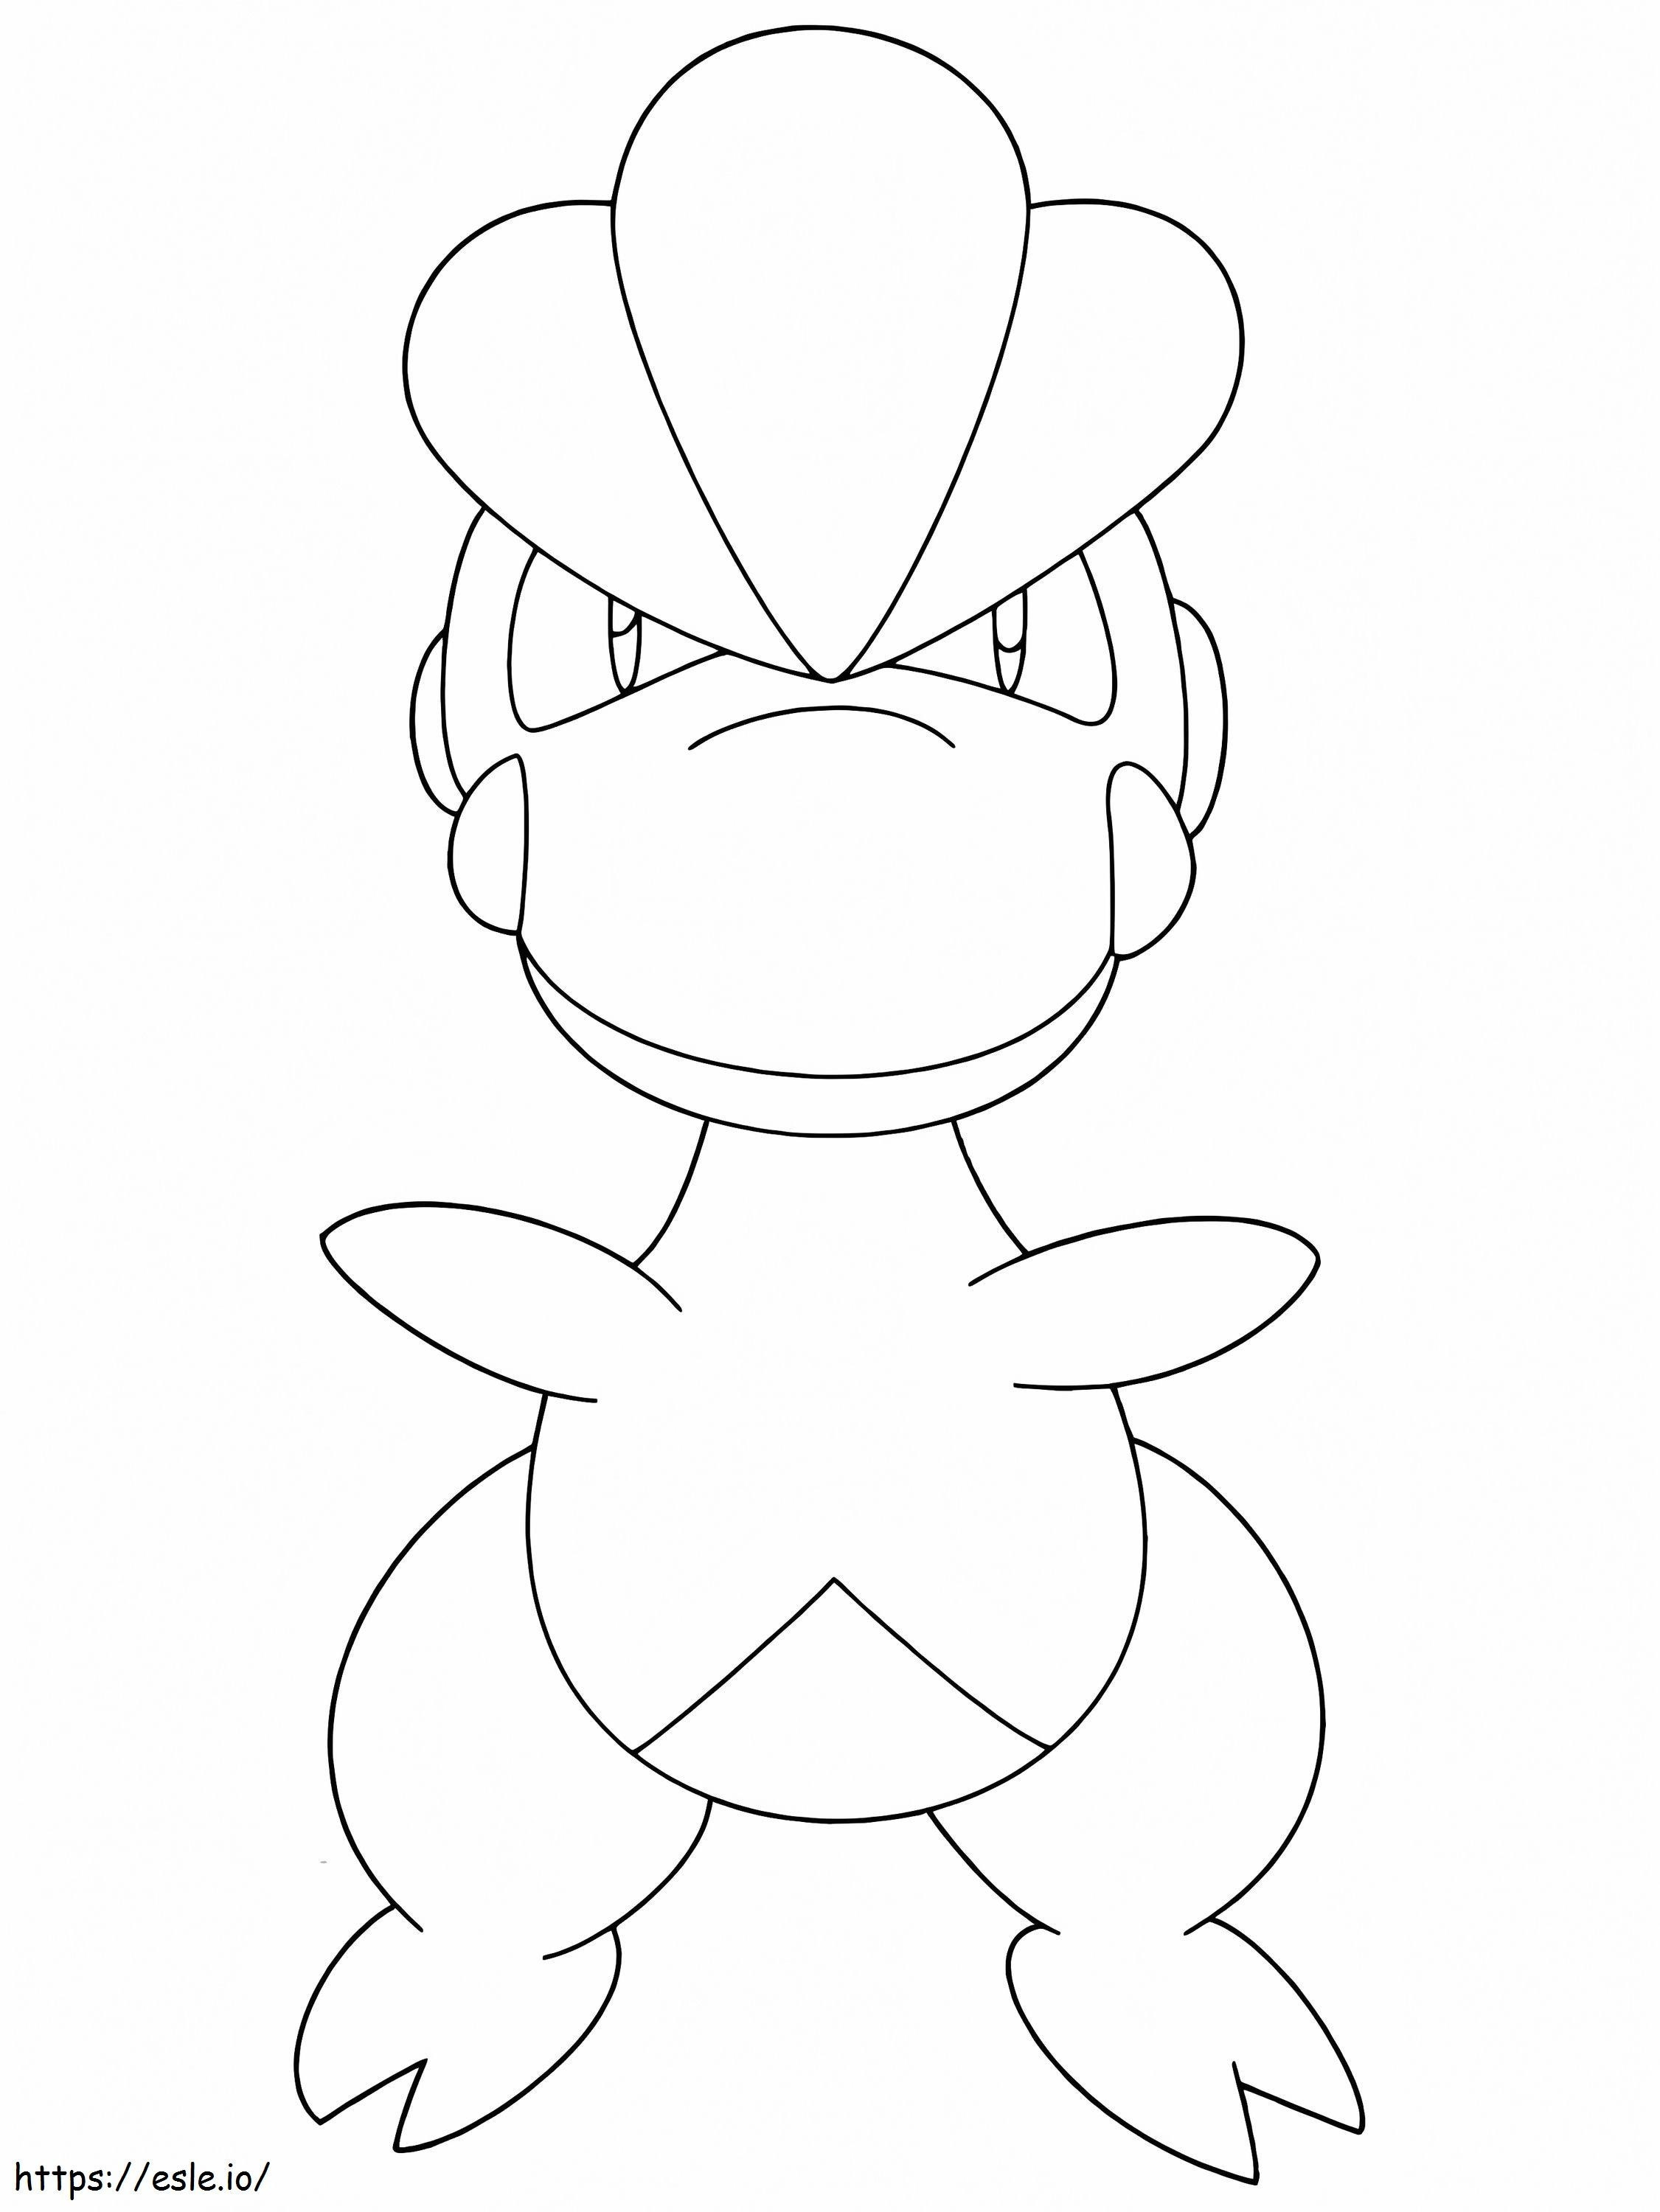 Printable Bagon Pokemon coloring page